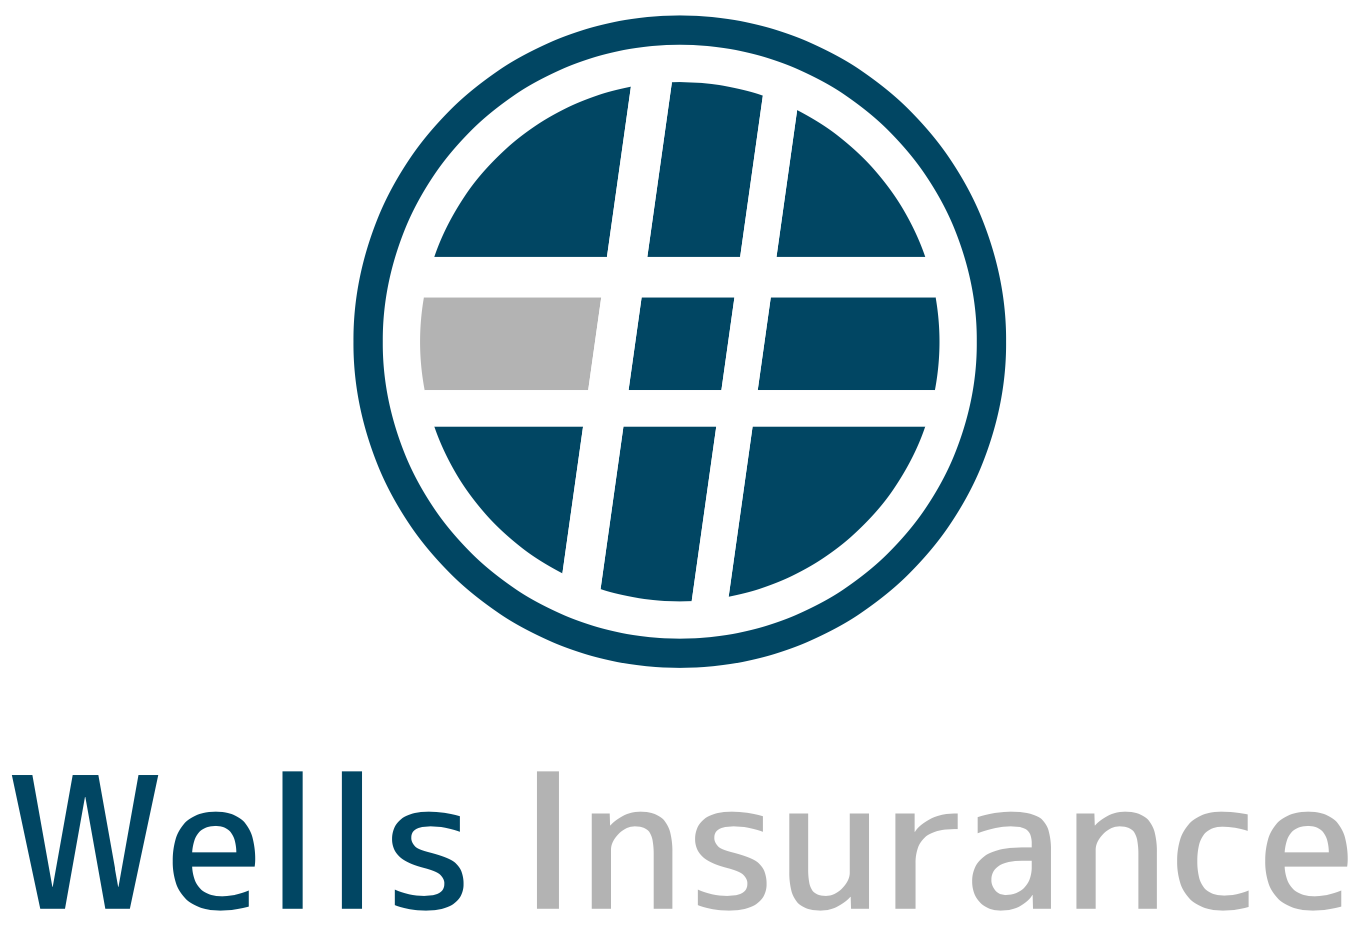 Wells Insurance